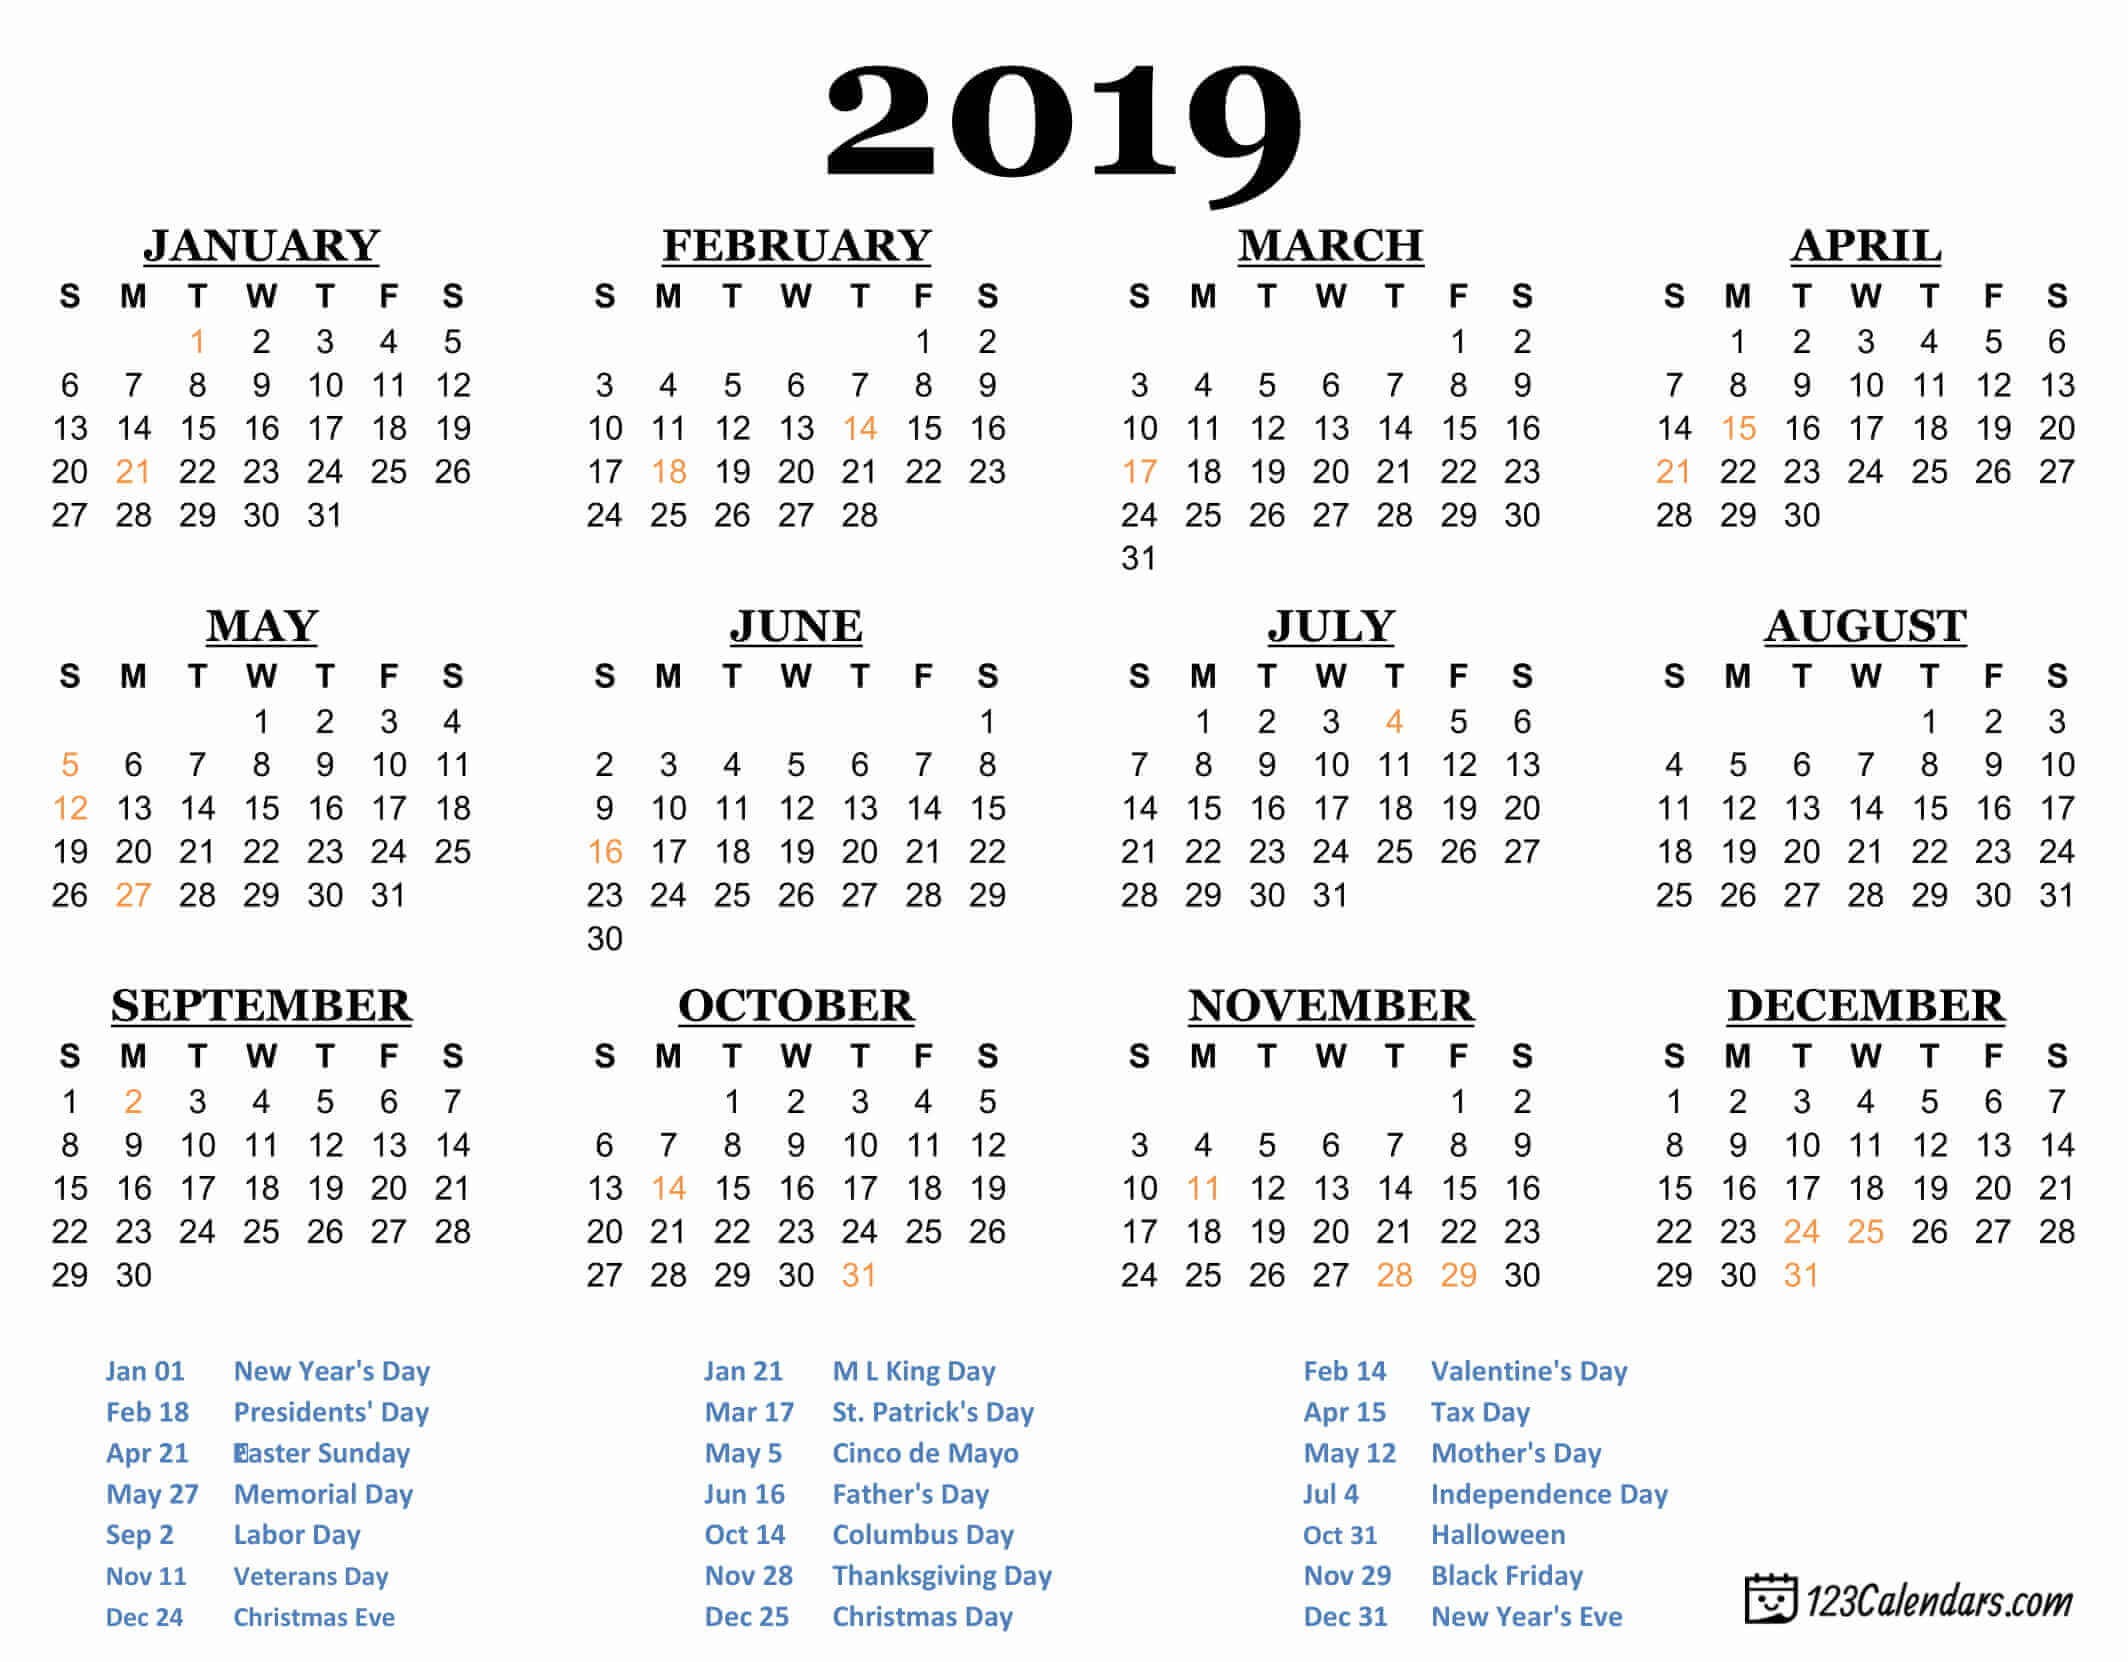 2019 Printable Calendar 123Calendars